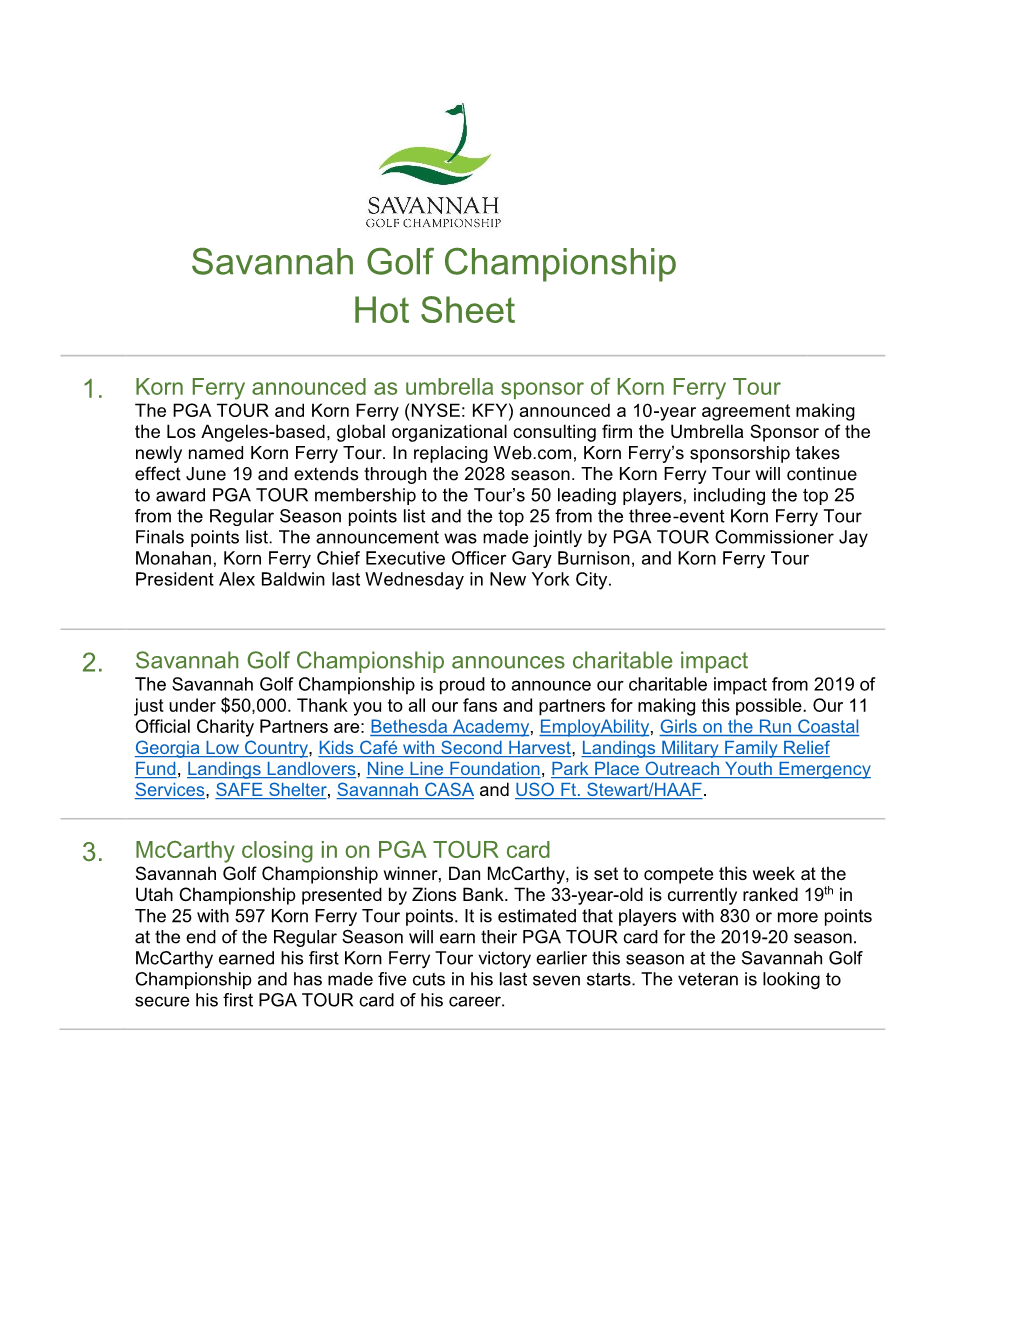 Savannah Golf Championship Hot Sheet